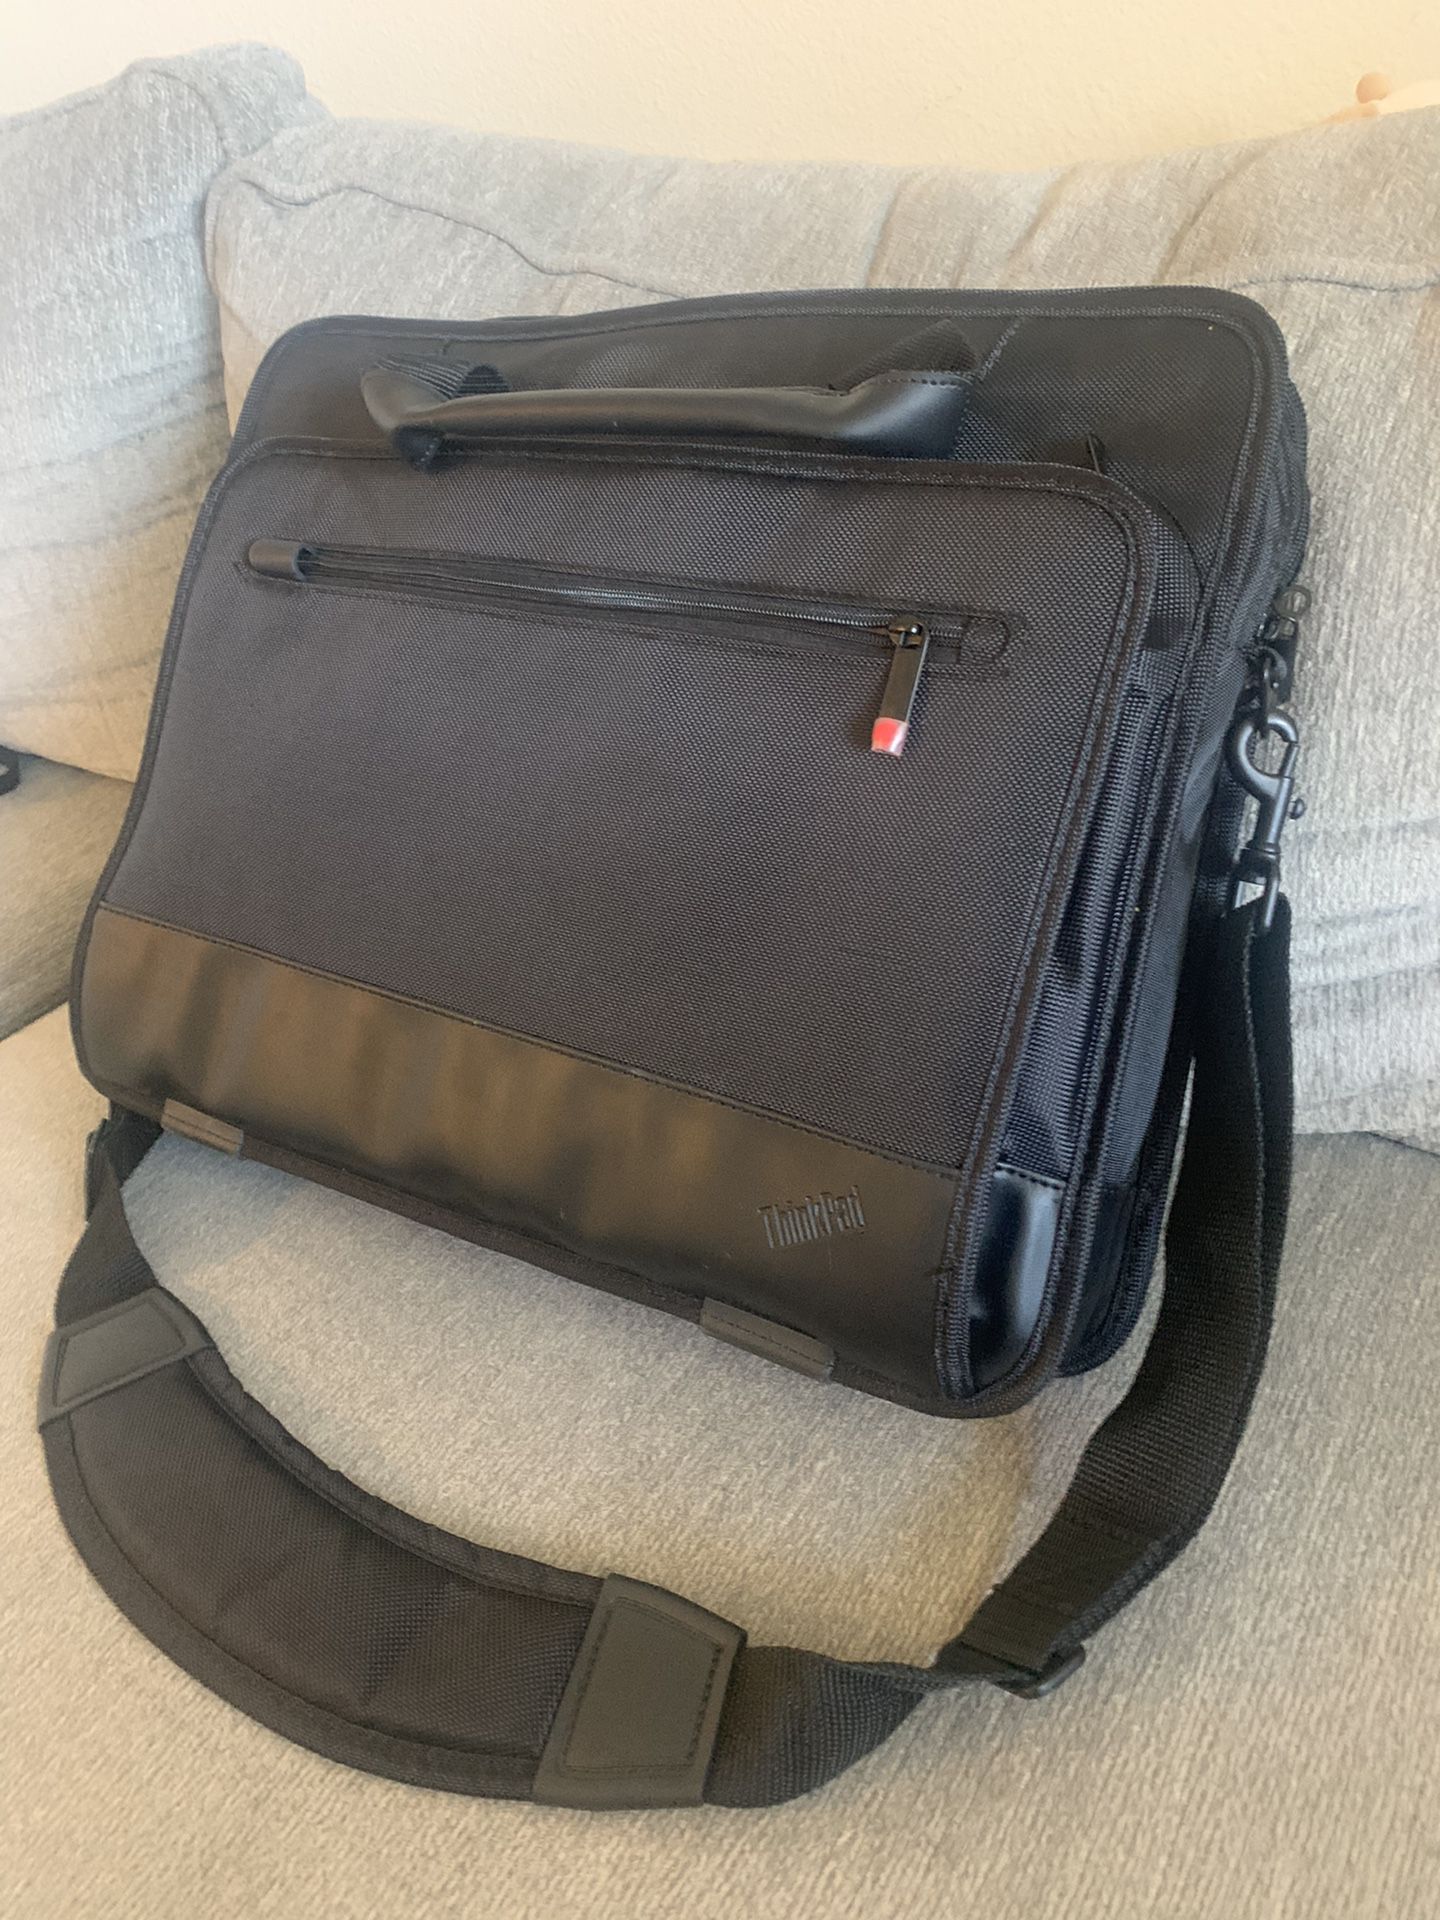 New Laptop Bag